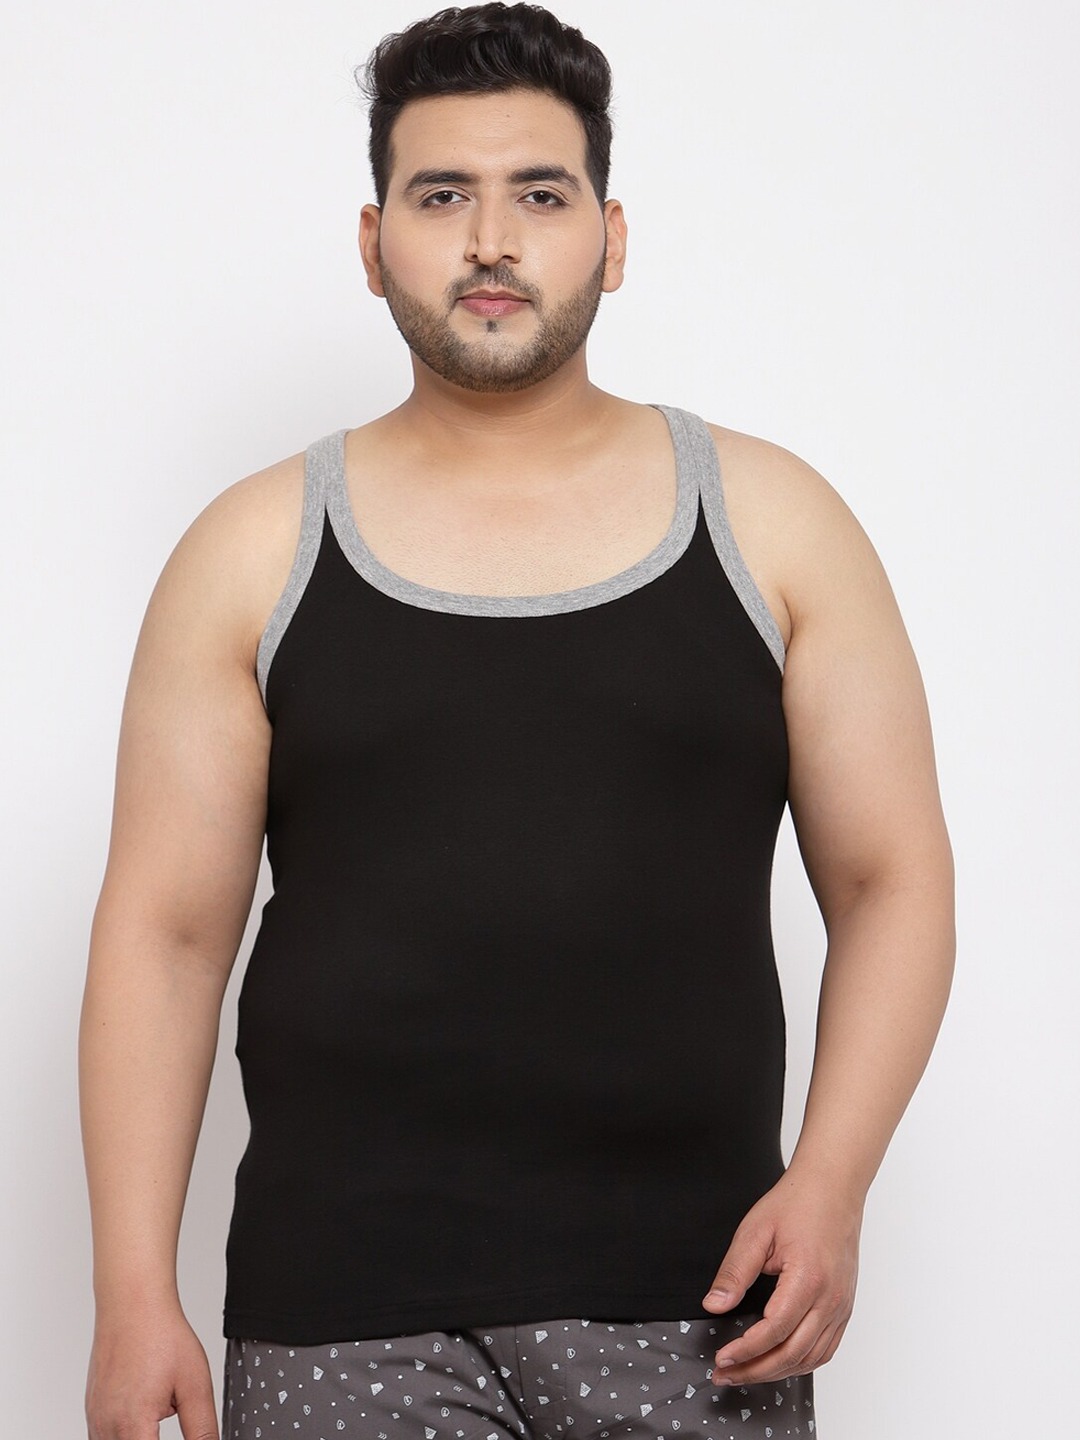 Clothing Innerwear Vests | plusS Men Plus Size Black Solid Innerwear Vest MSD9907 - EL59871